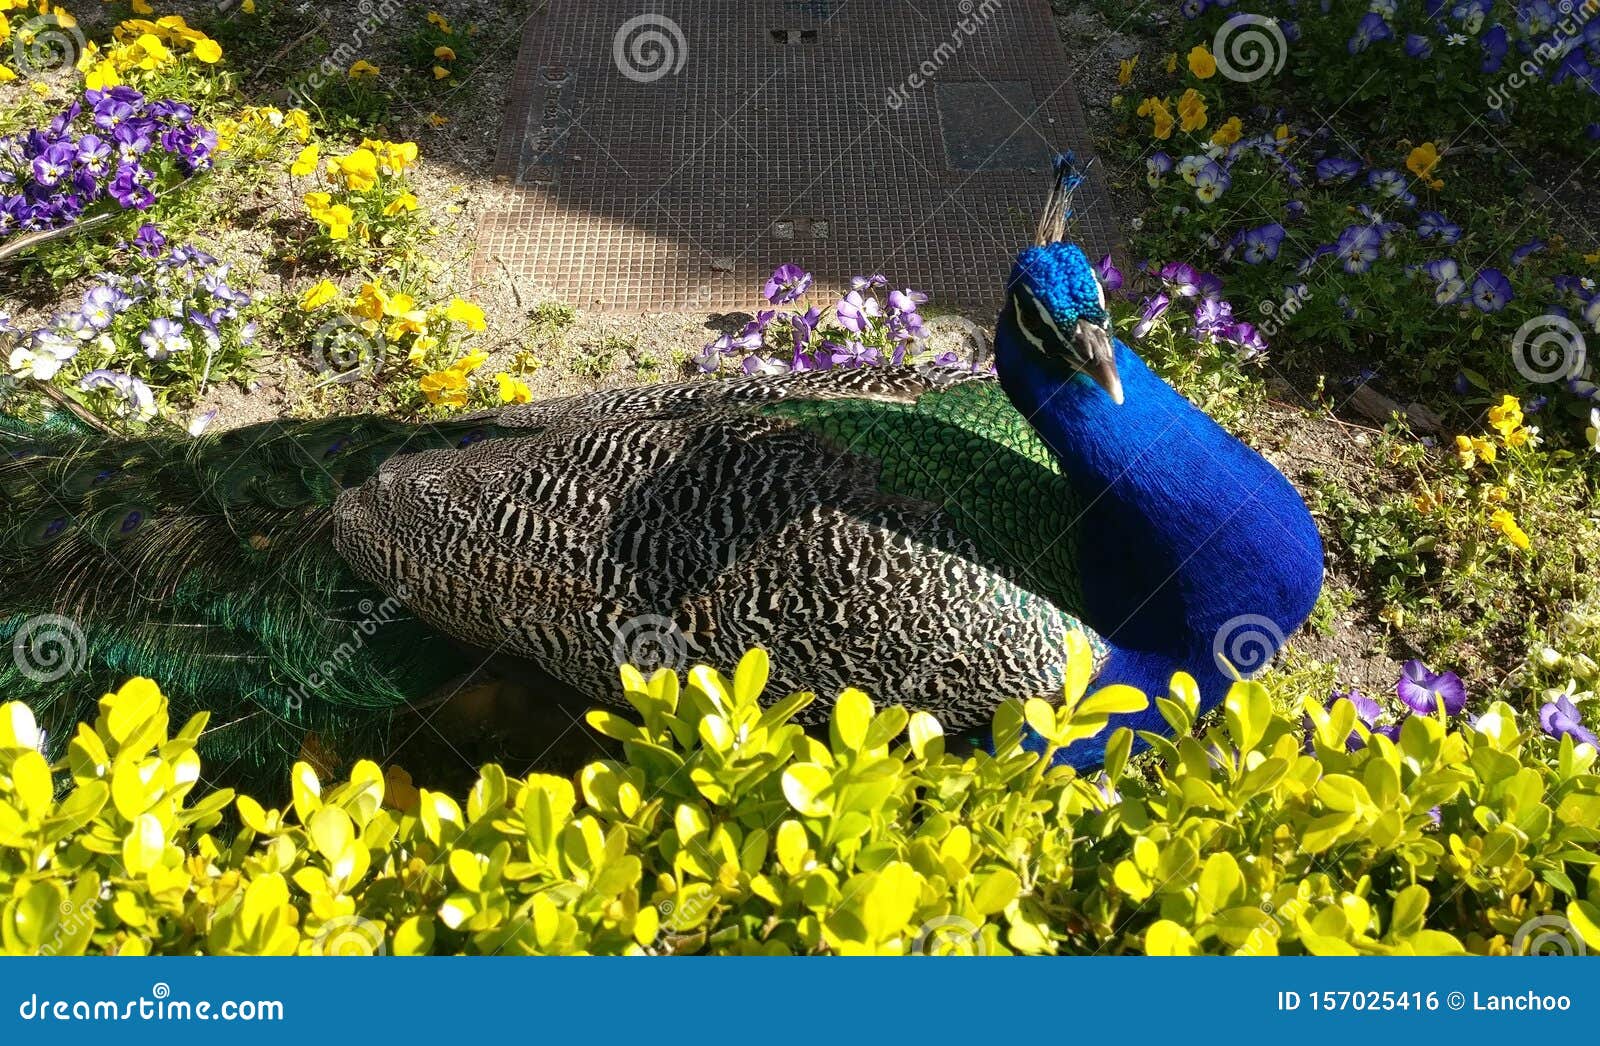 peacock lying in the garden